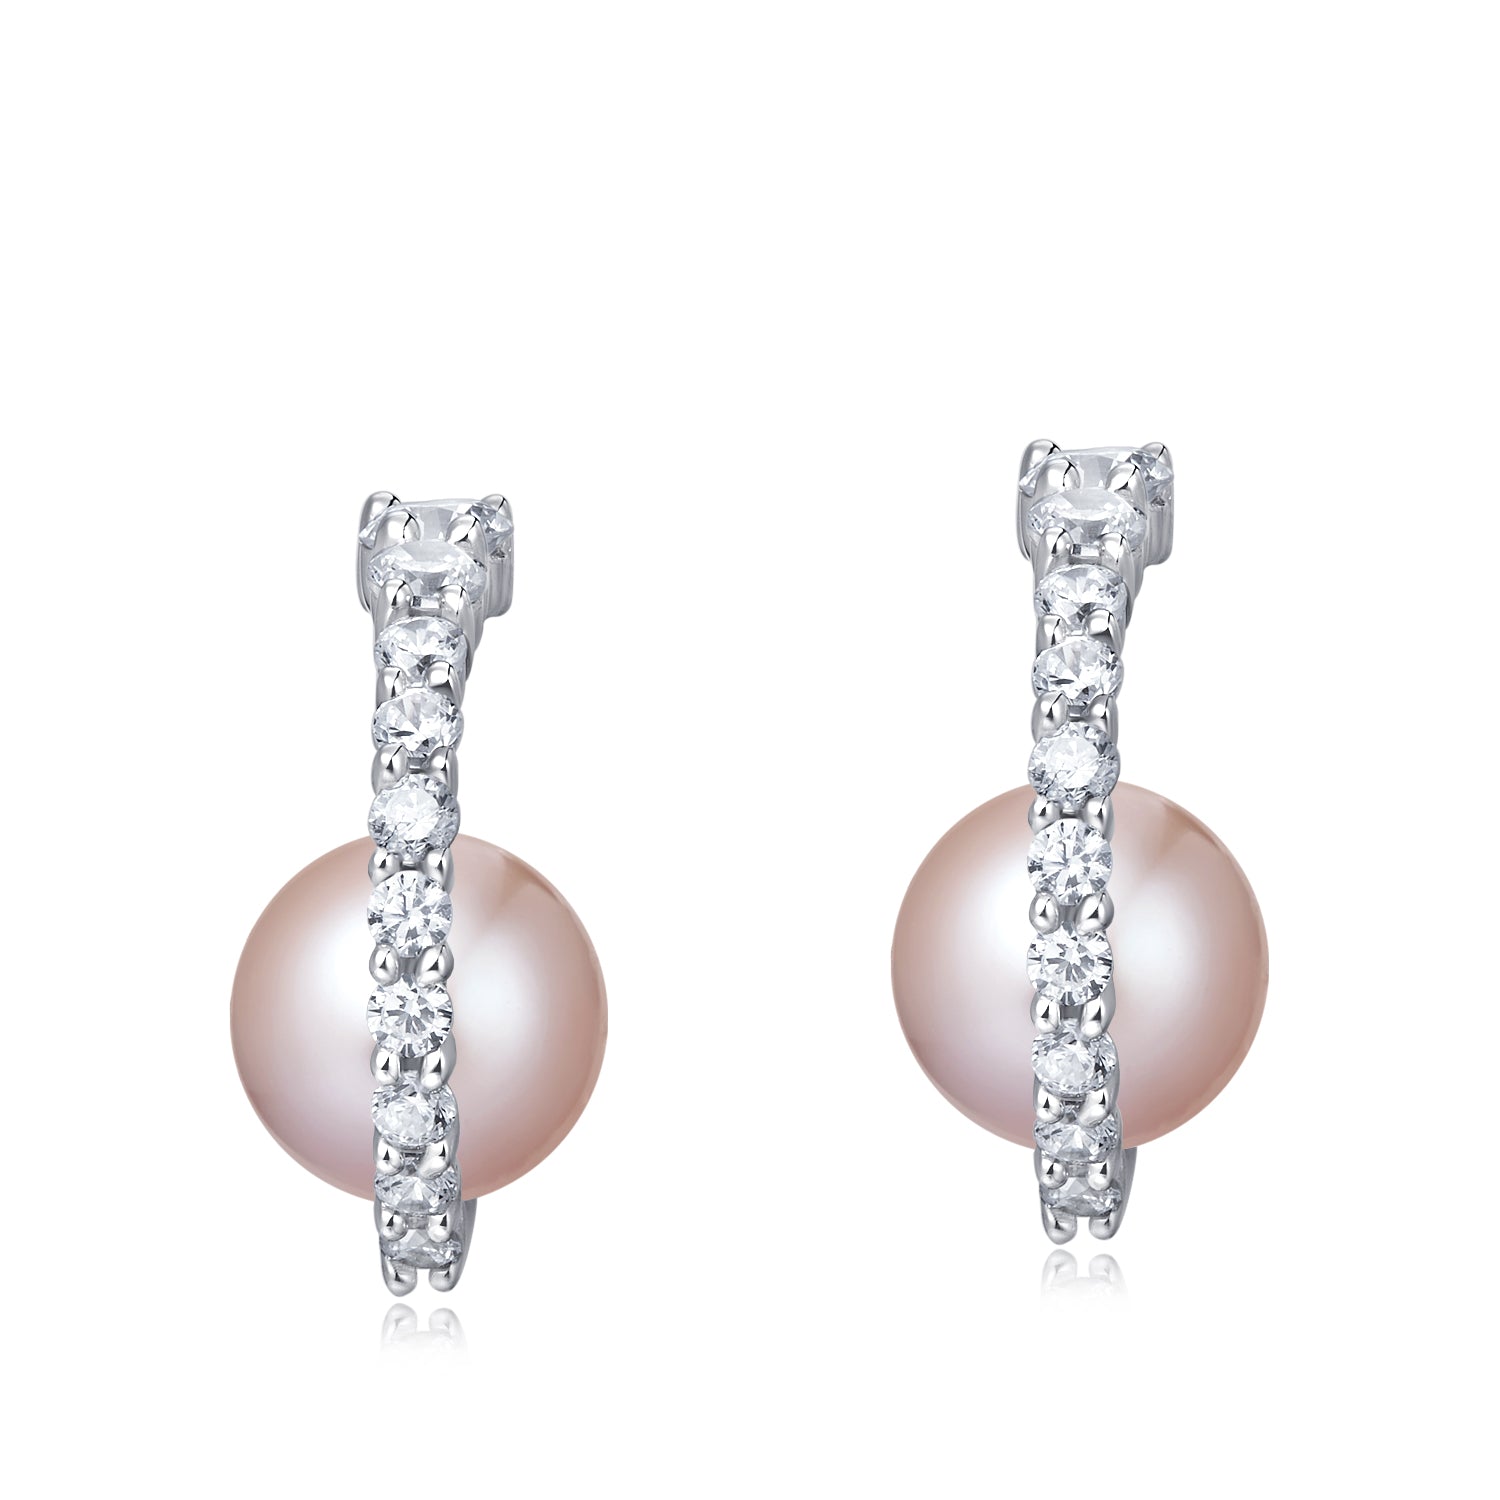 Freshwater Pearl Earrings (Pink Pearl) - Woment Designer Jewelry